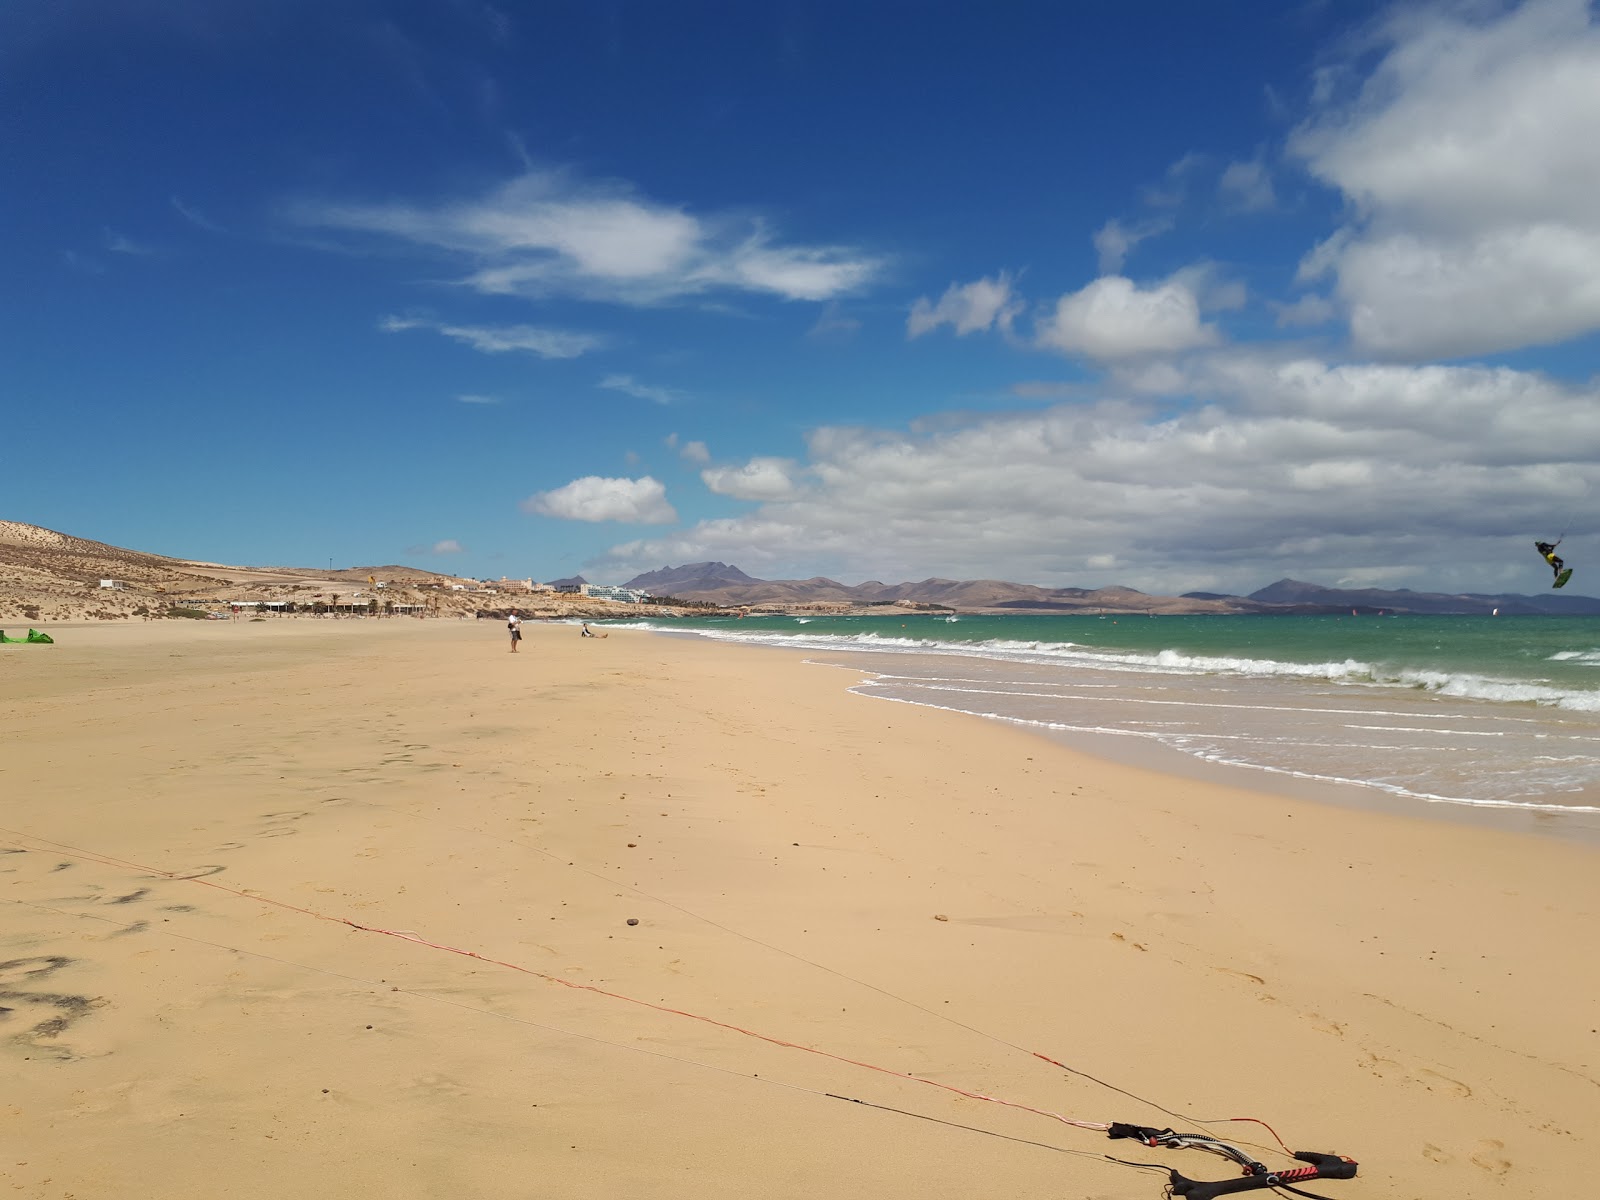 Foto di Playa de Sotavento de Jandia con una superficie del sabbia pura scura